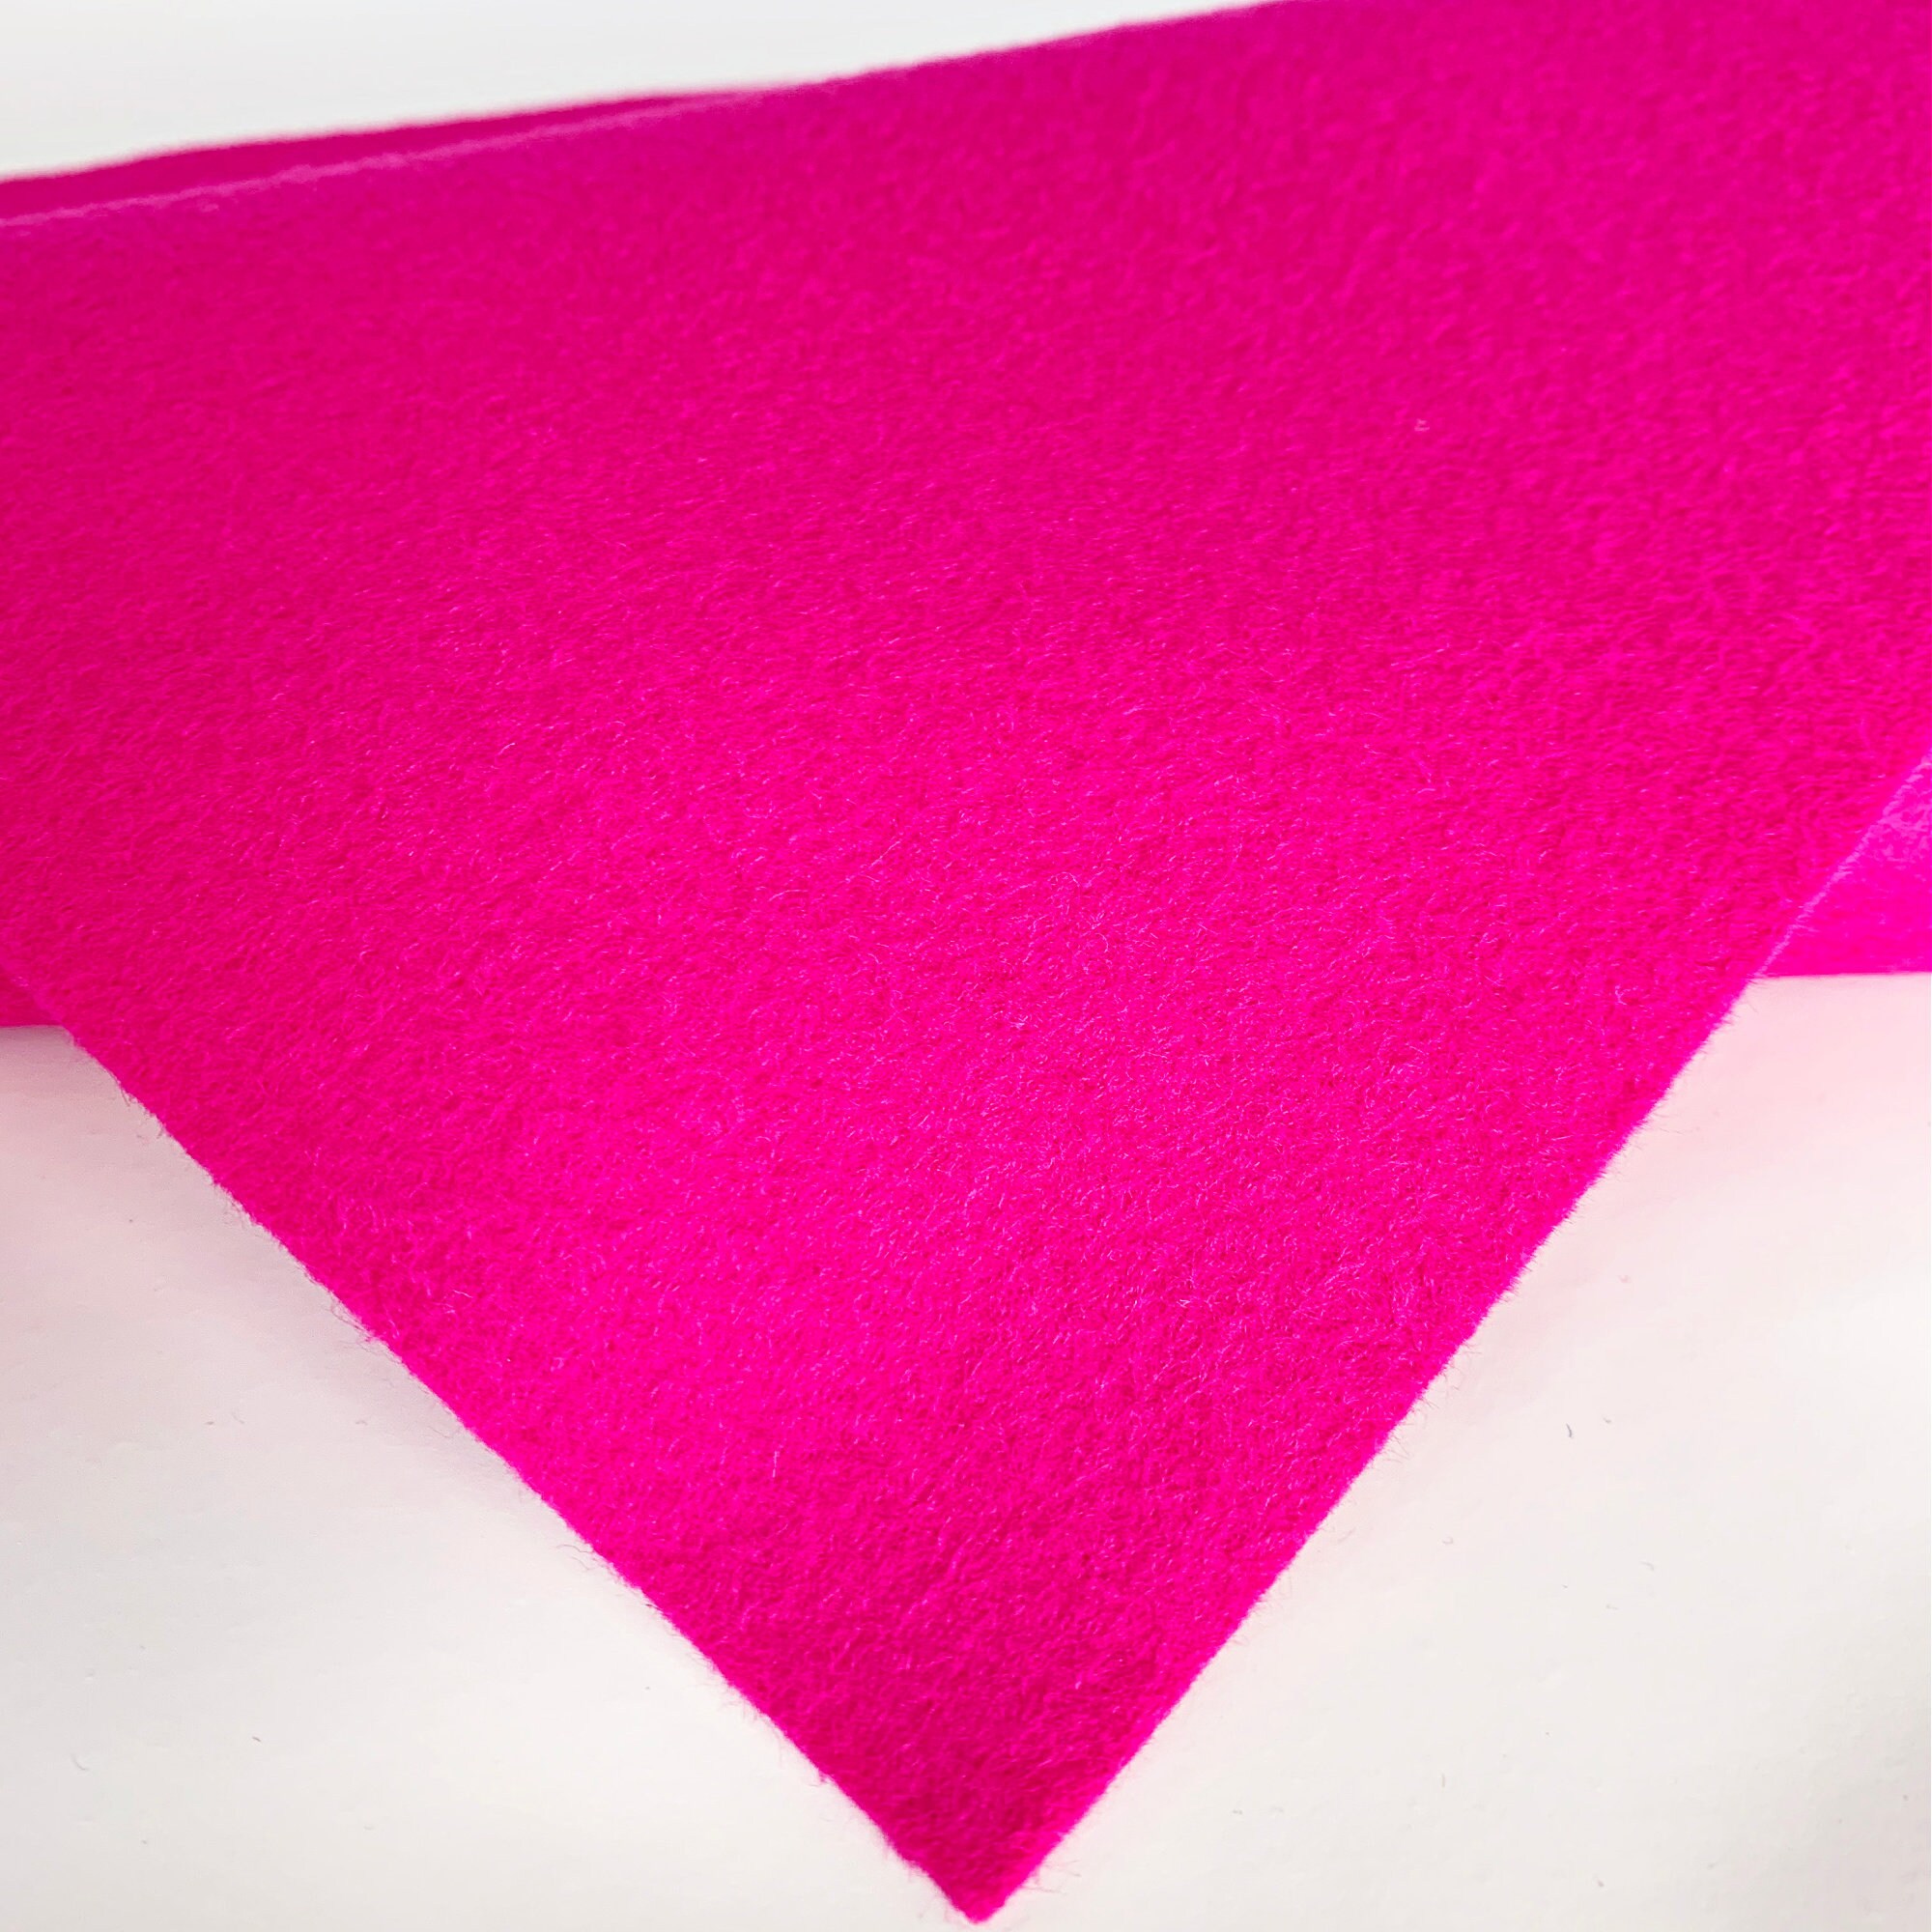 Fuchsia Wool Felt, Merino Blend Felt Fabric, Yardage, Pink Fuchsia